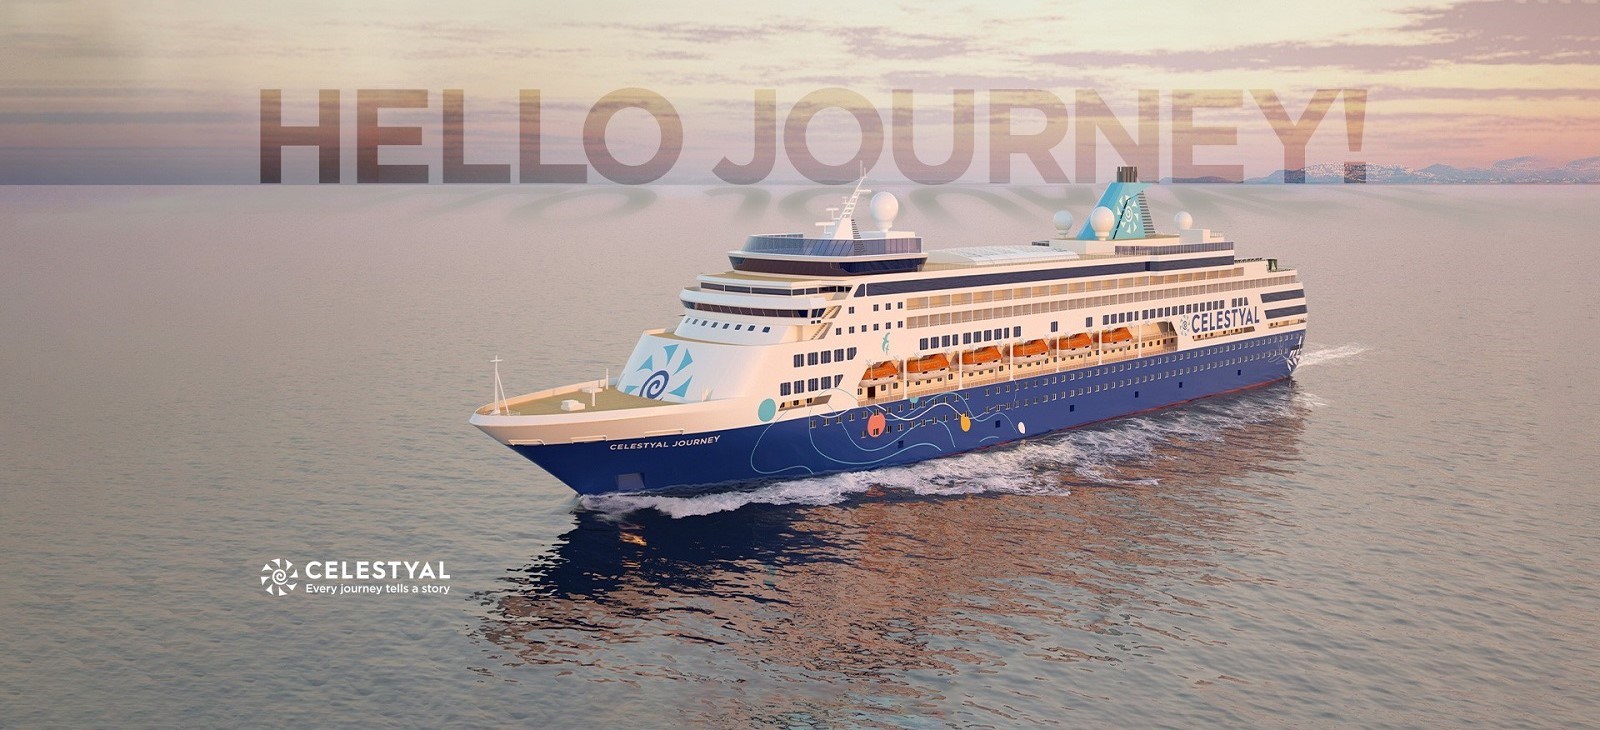 hello-celestyal-journey-ship-details